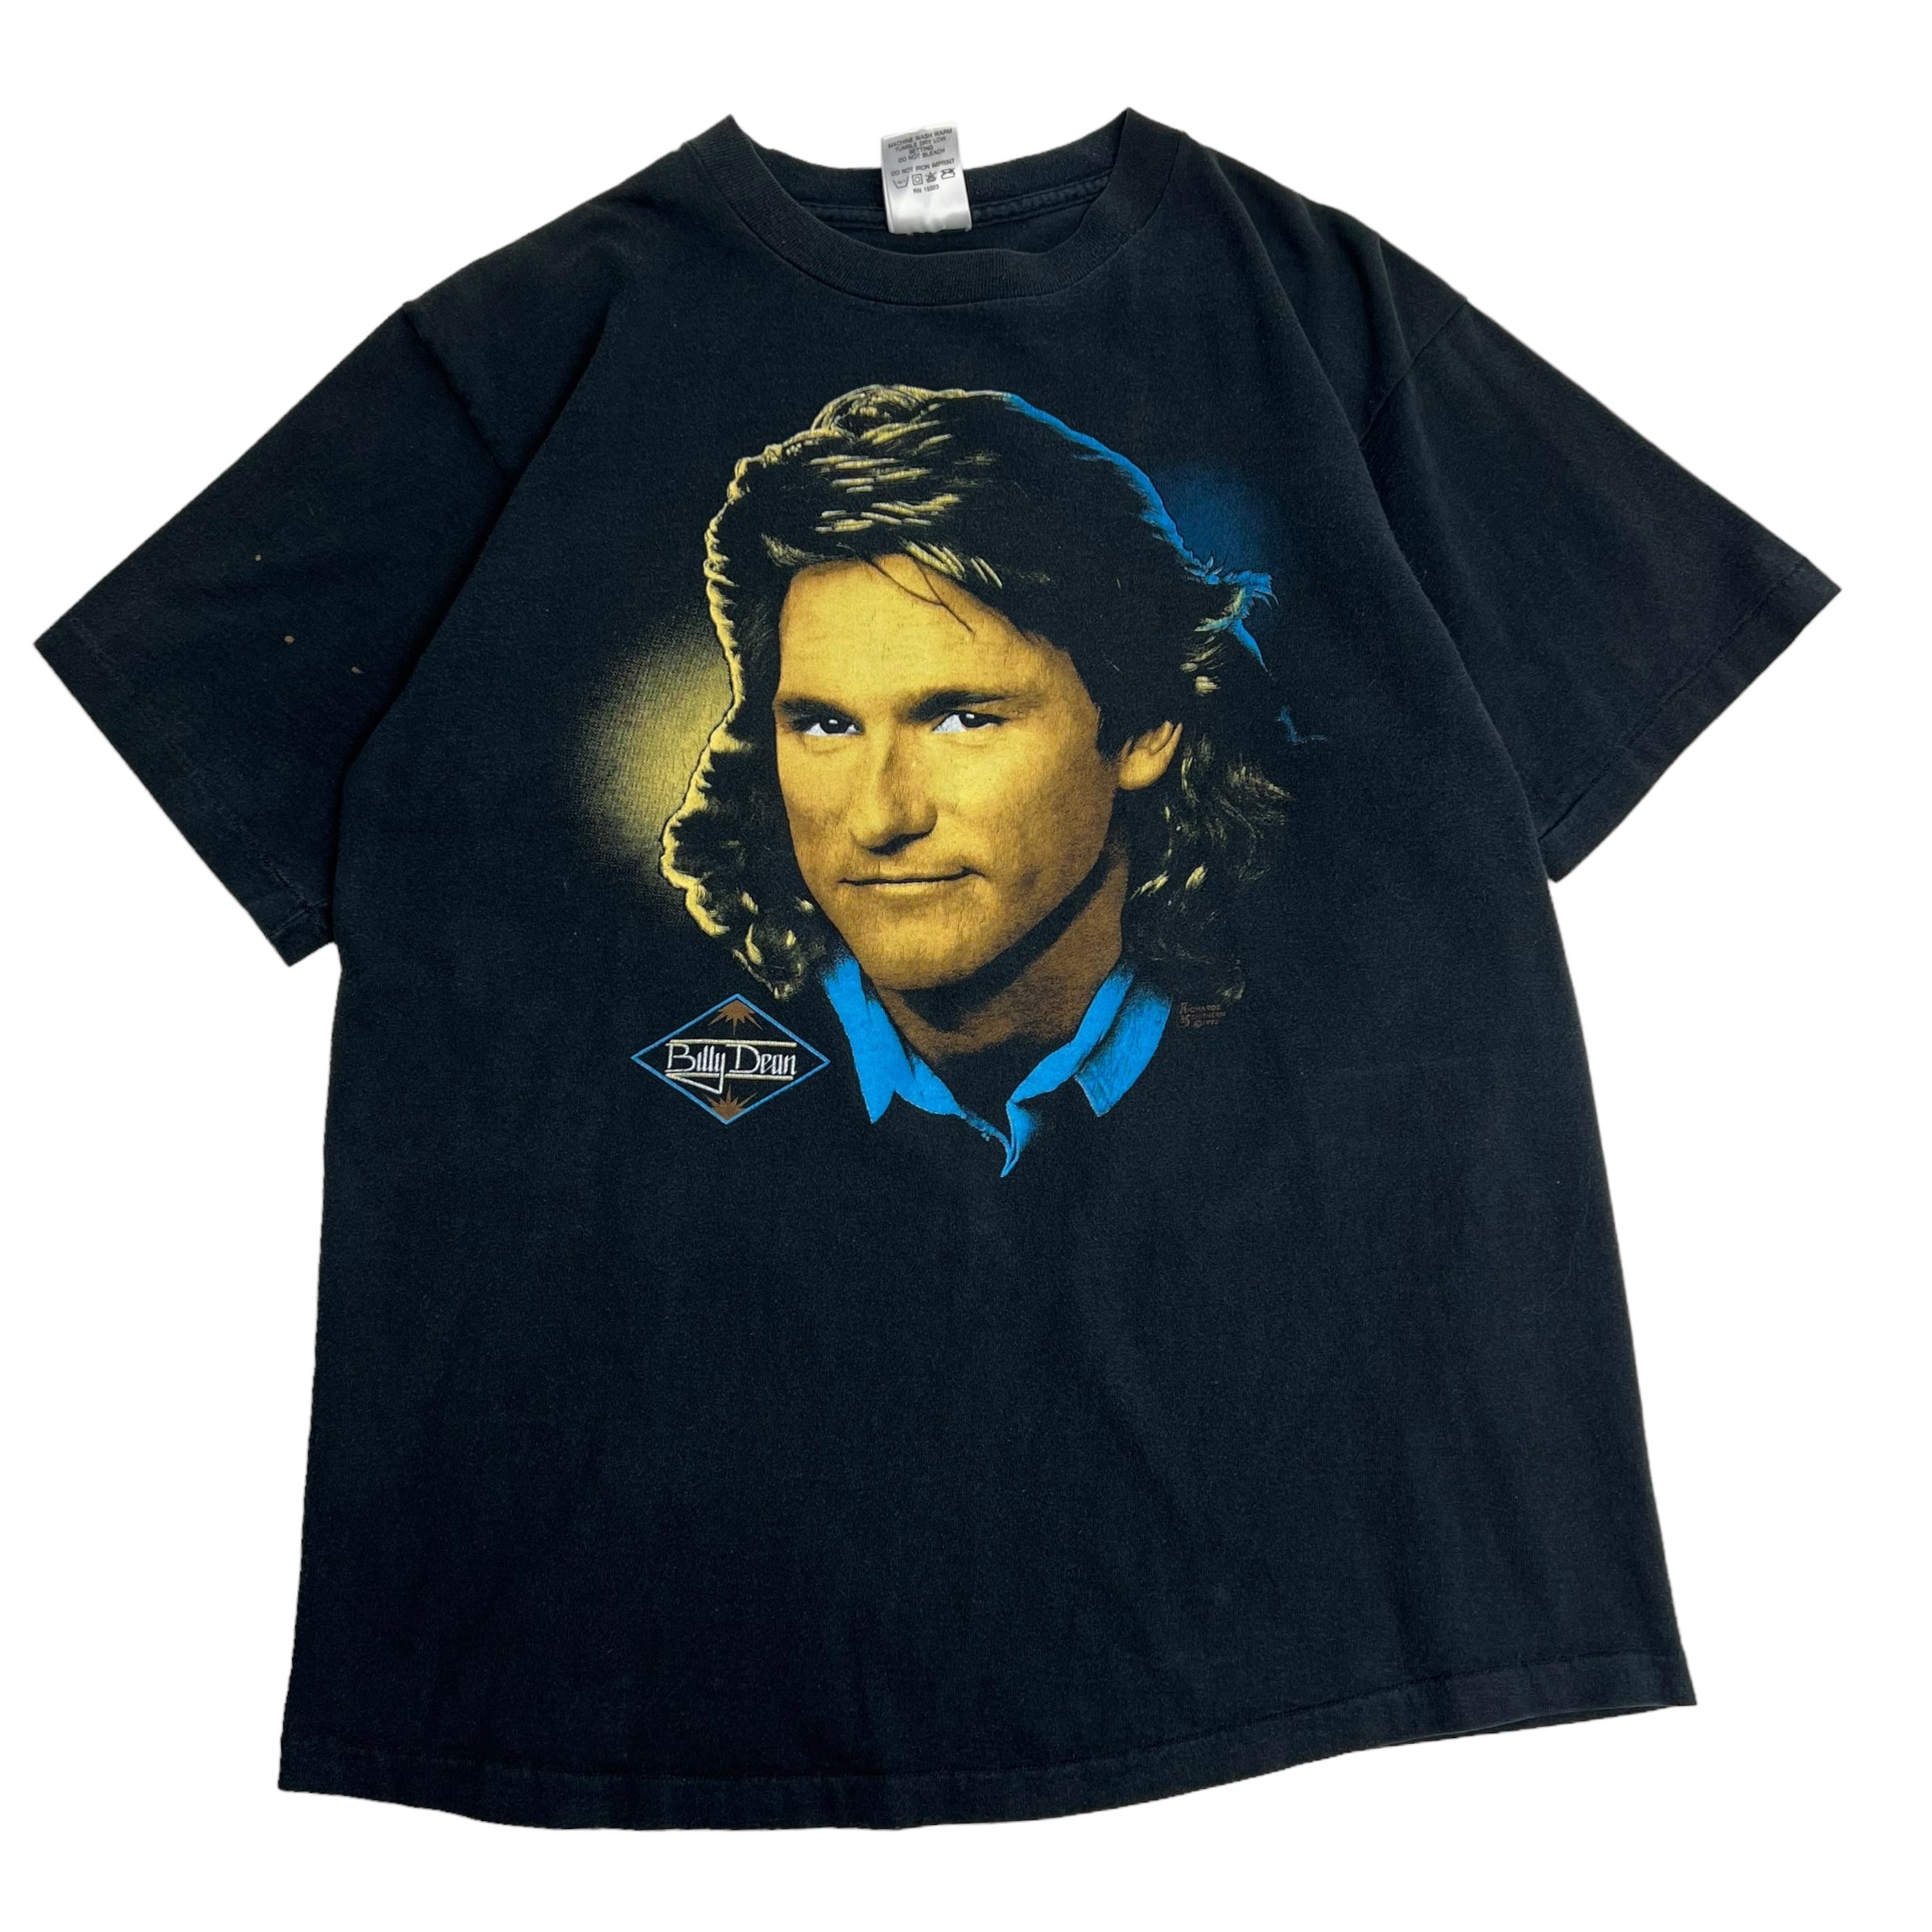 1992 Billy Dean Tour T-shirt - Vintage Concert T-Shirt